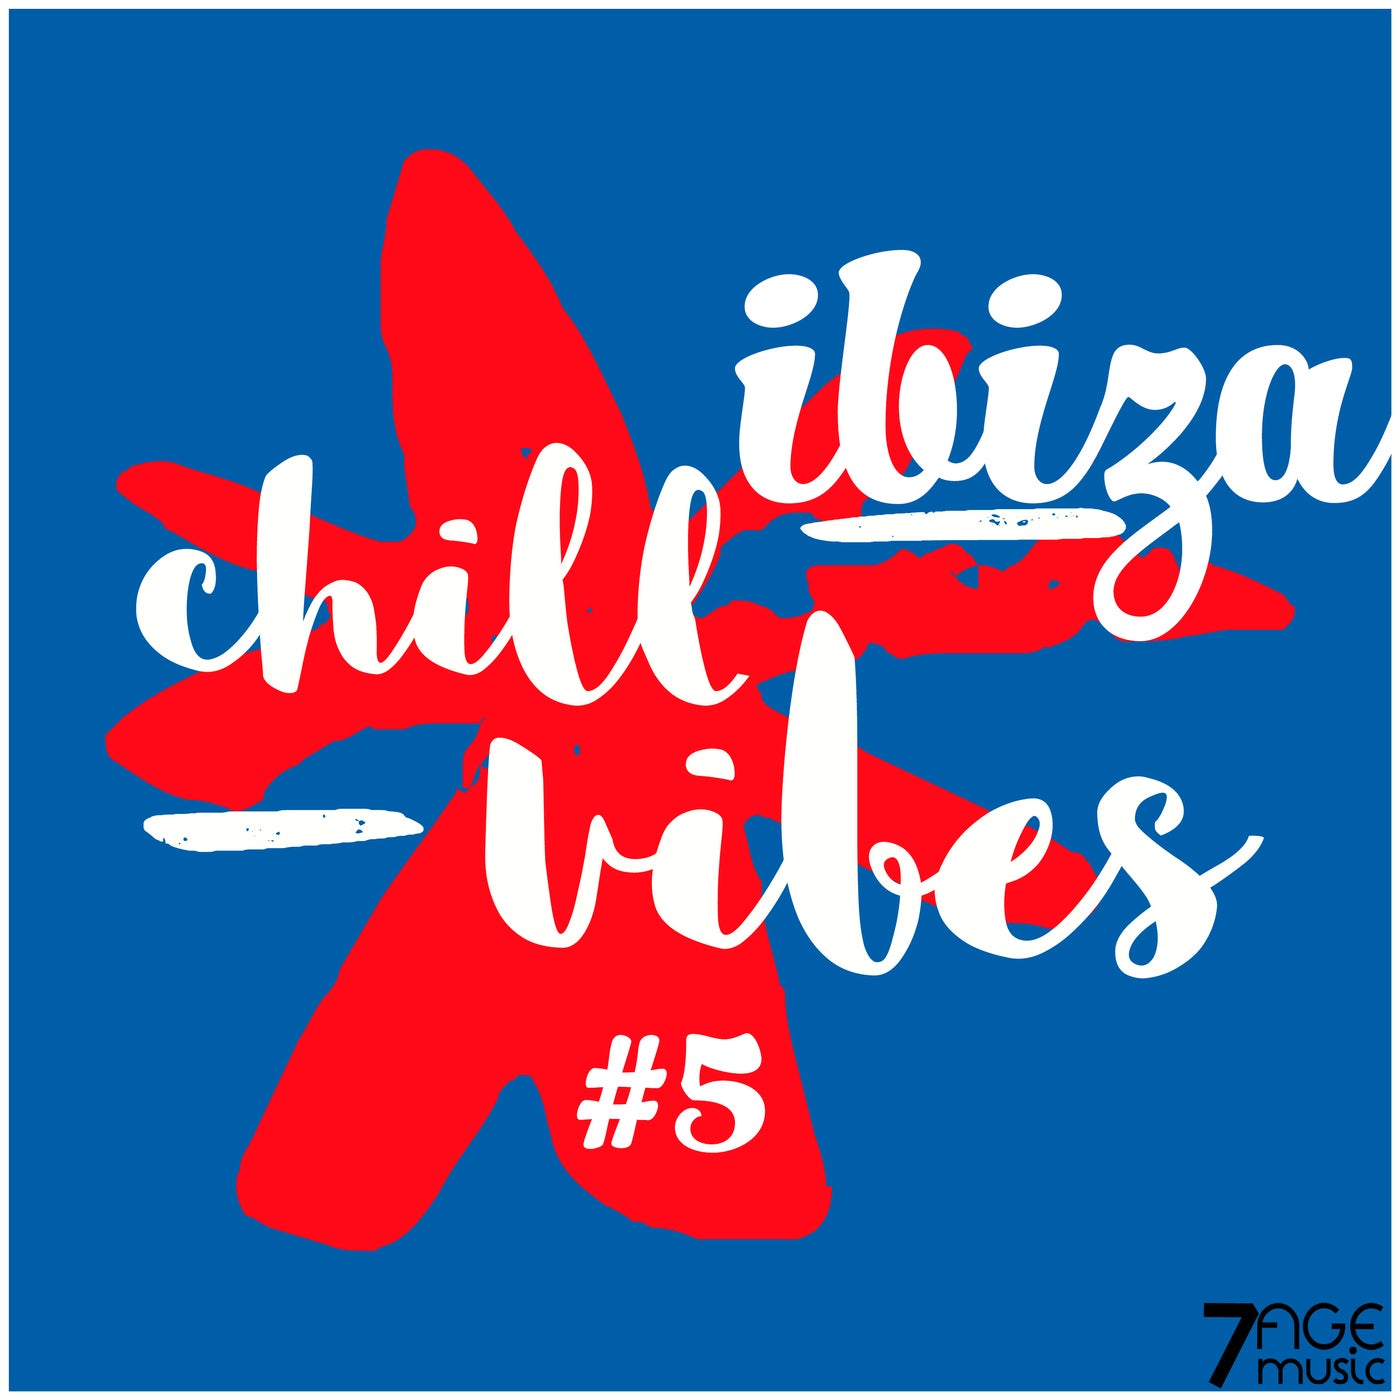 Ibiza Chill Vibes, Vol. 5